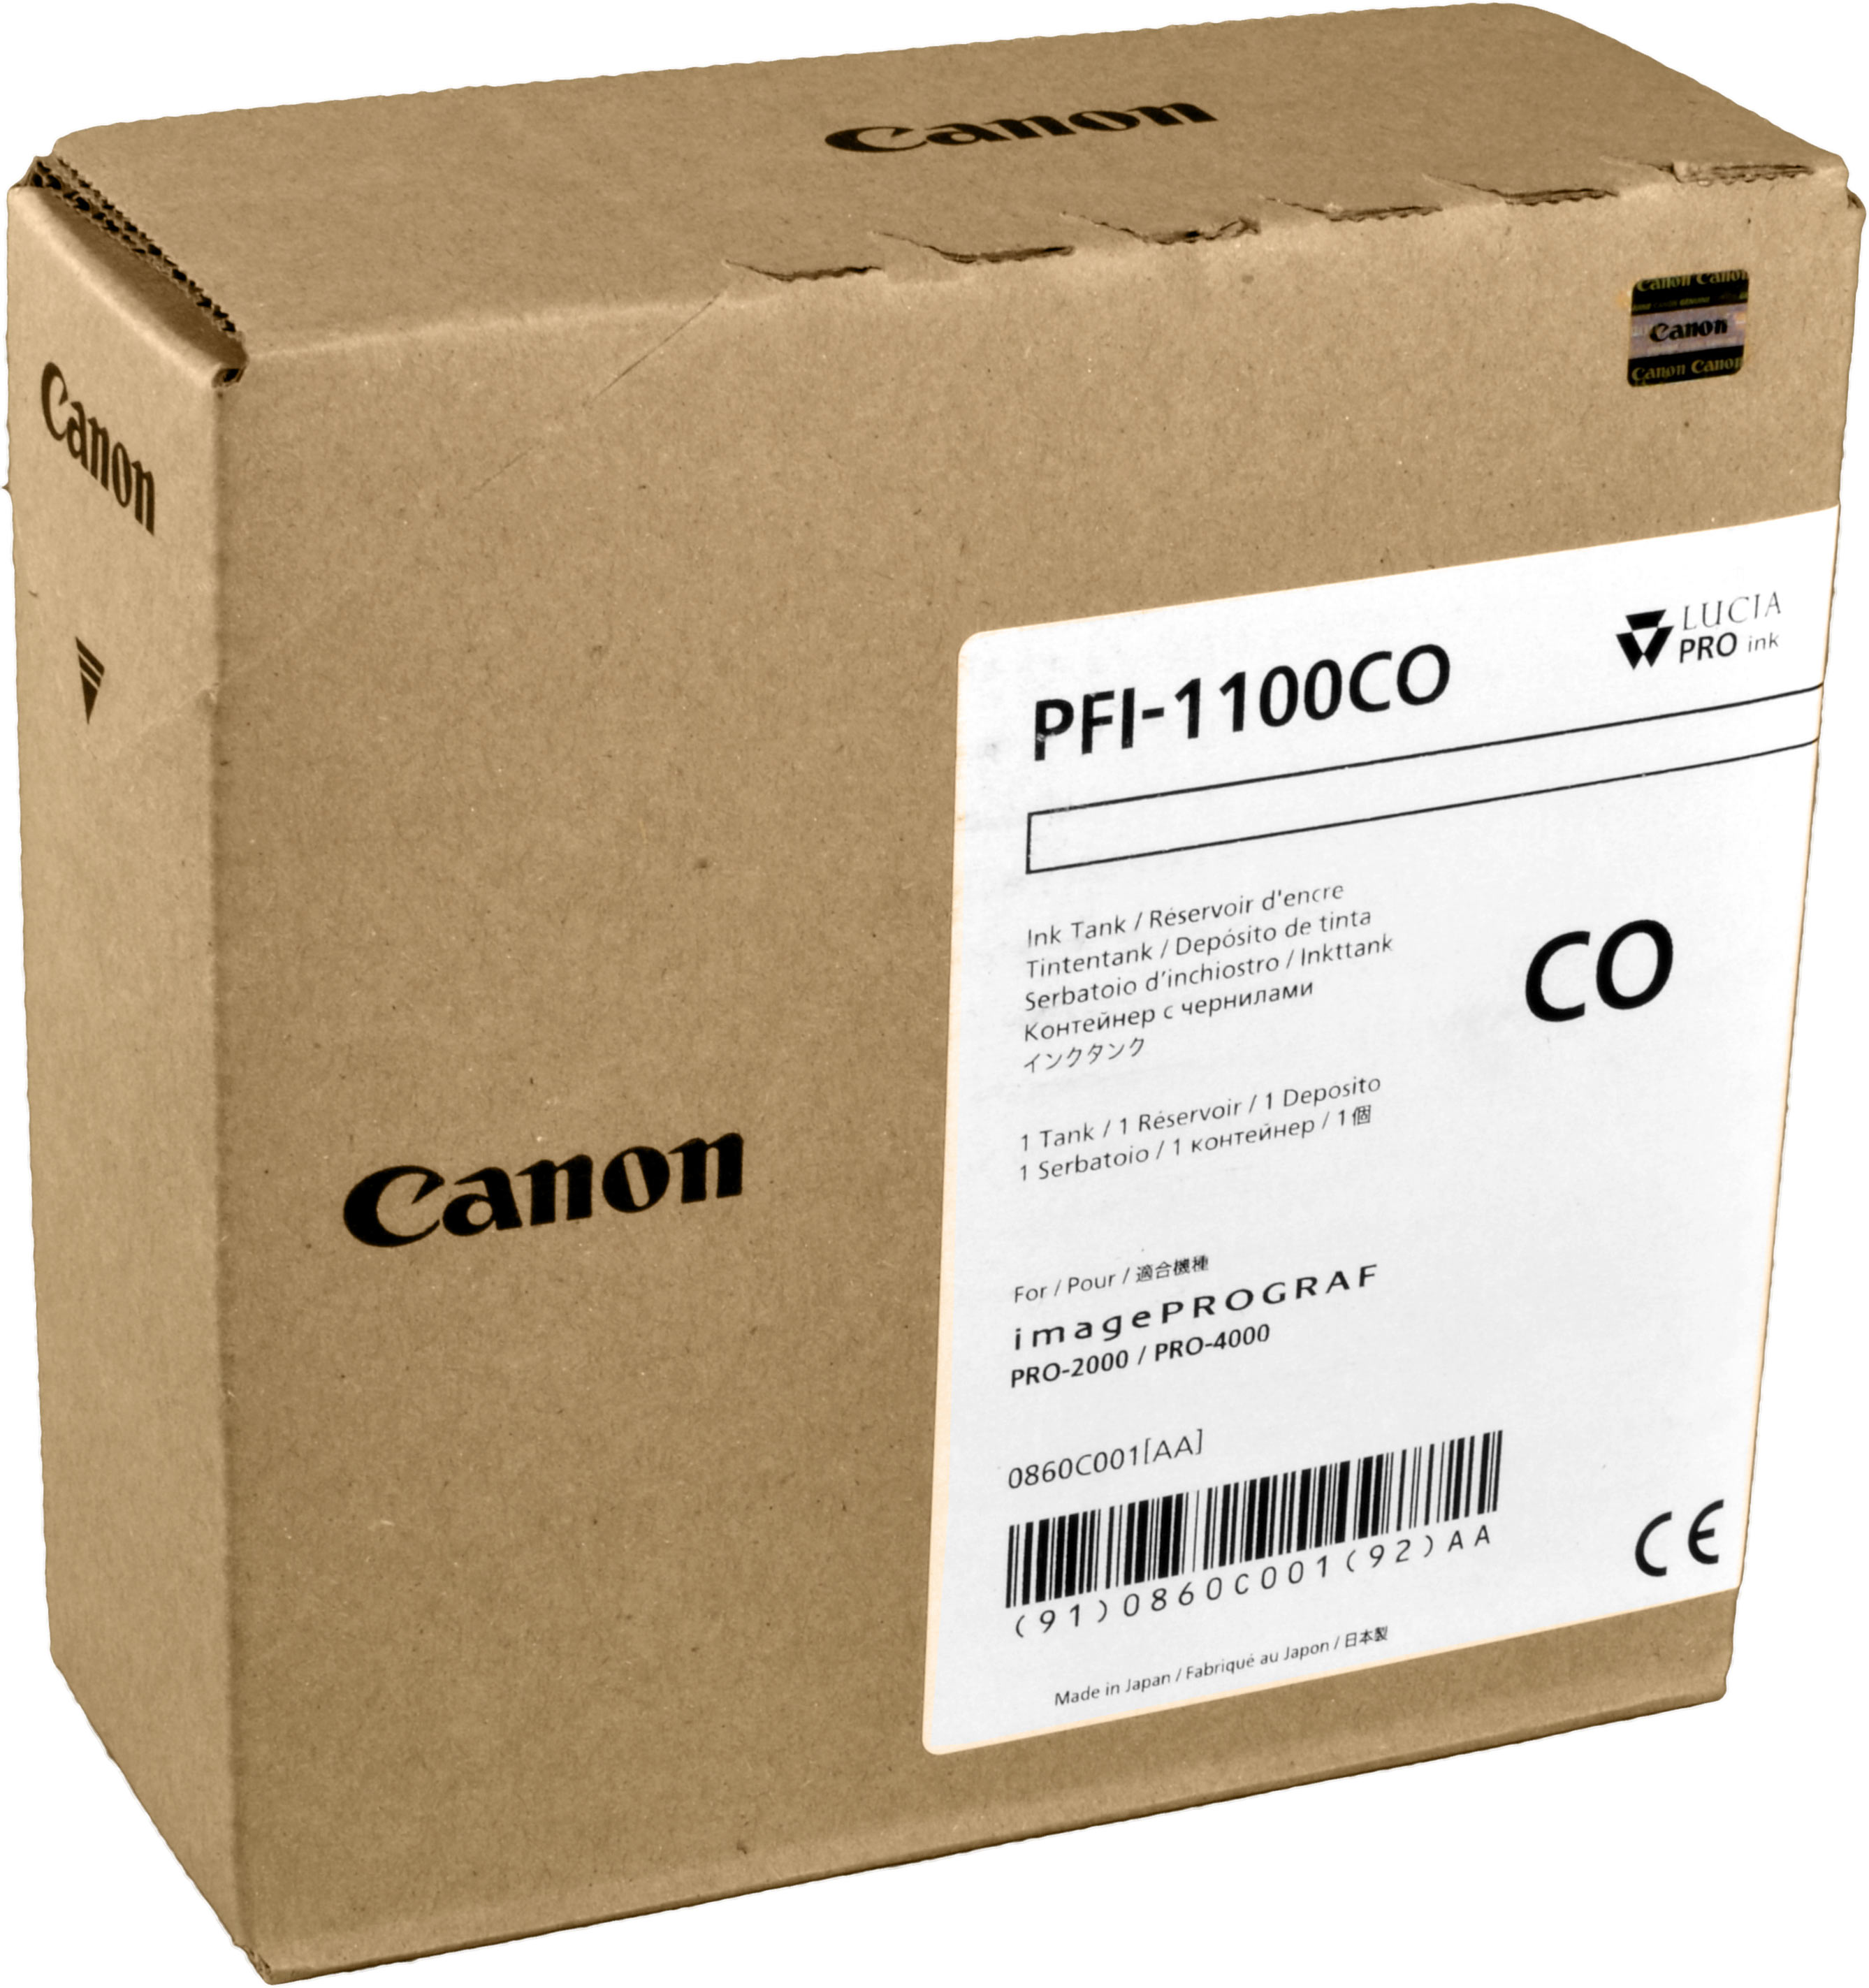 Canon Tinte 0860C001  PFI-1100CO  chroma optimizer